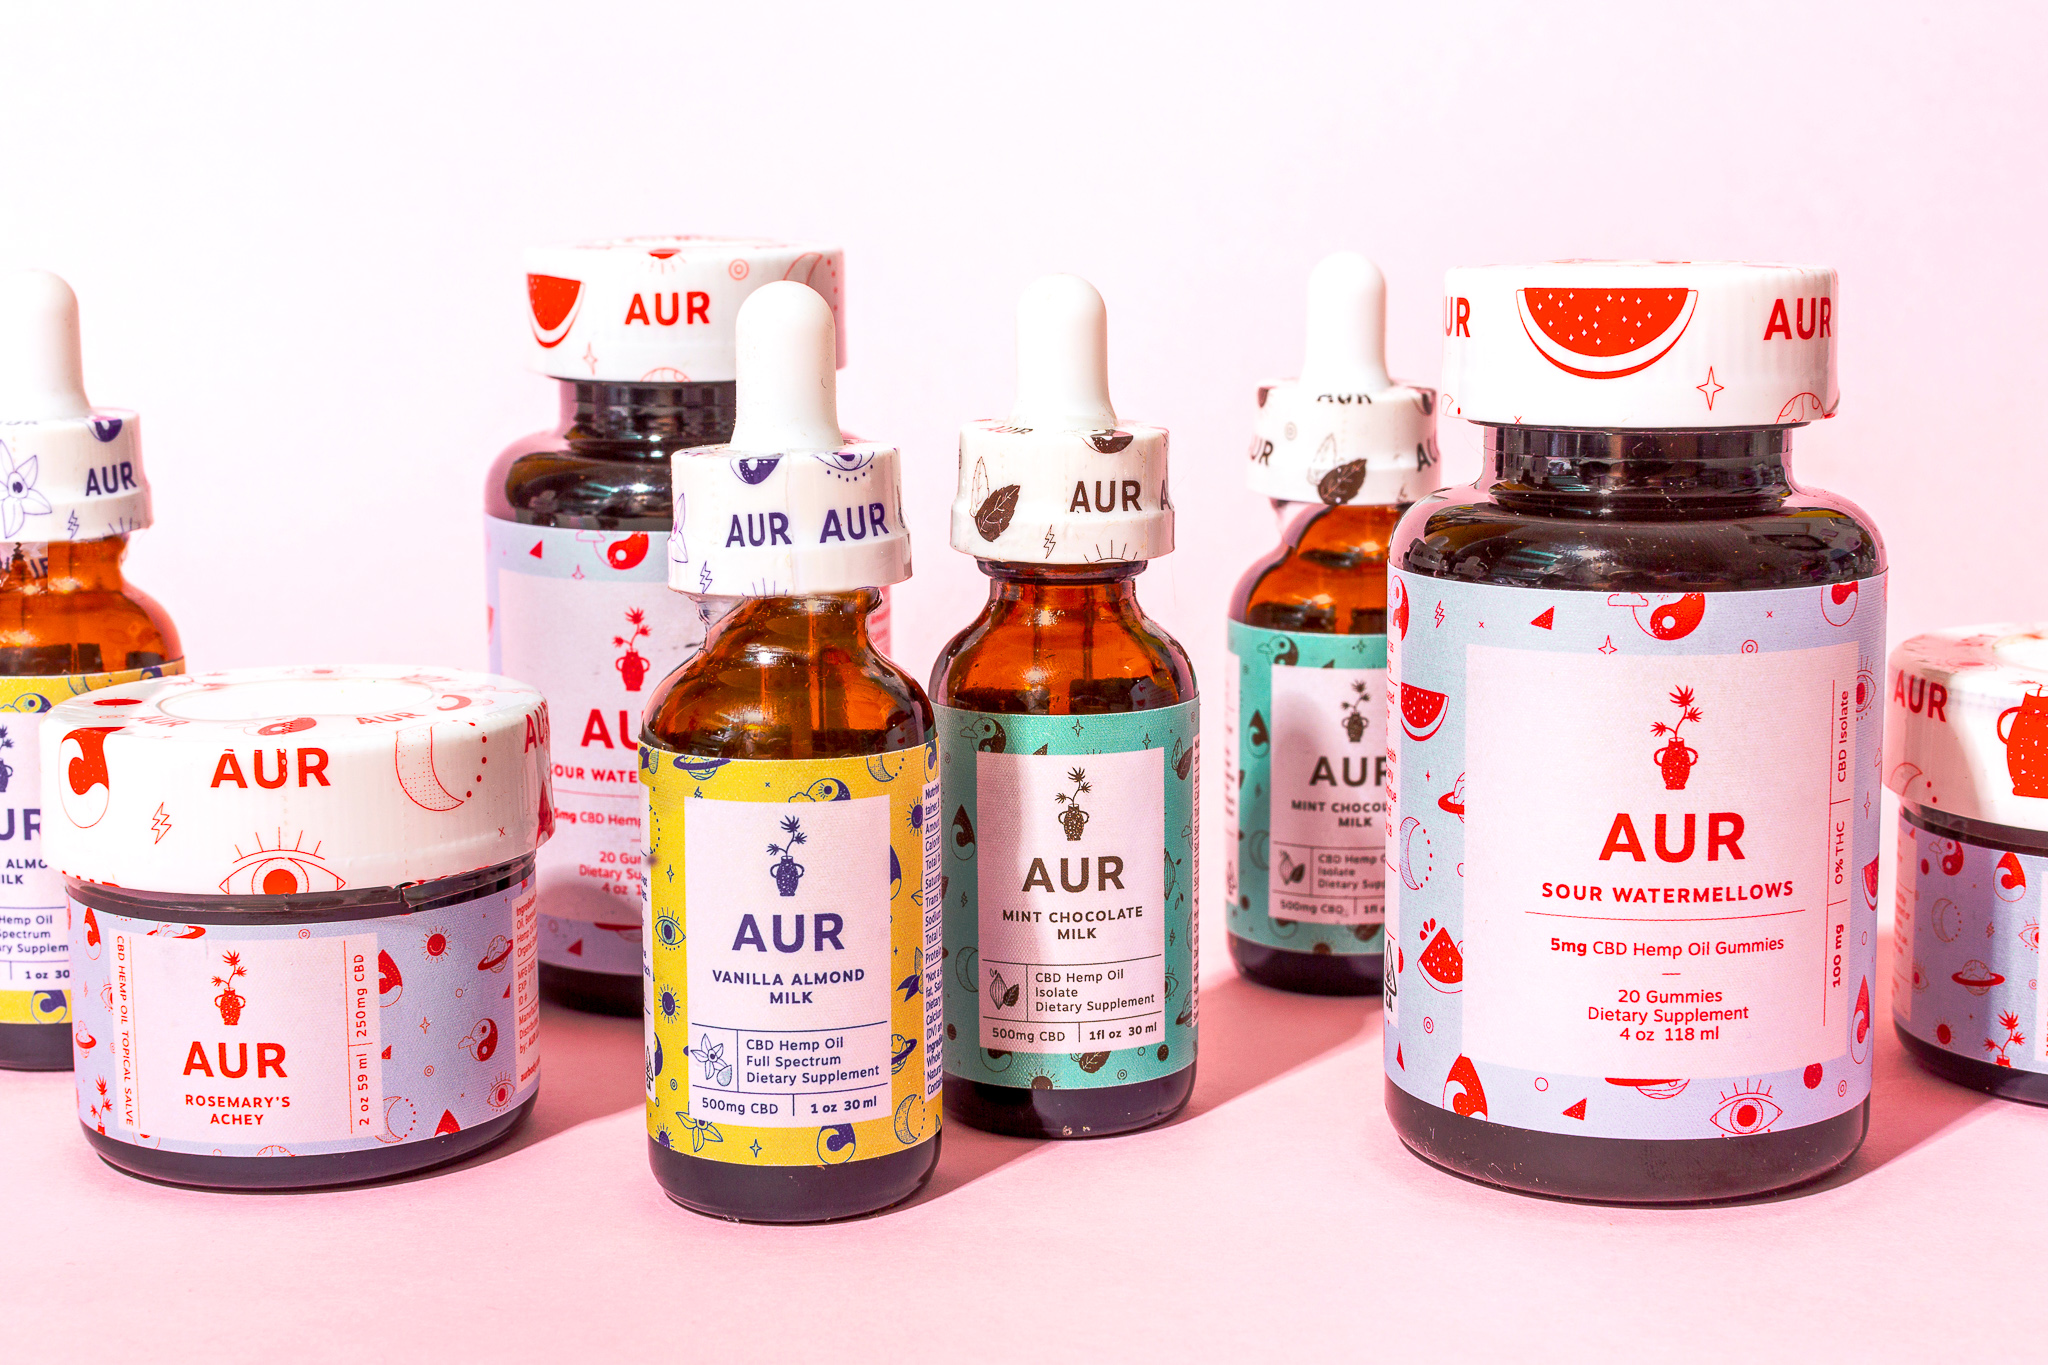 Consumer Brand Design for ‘AUR’ Body Tinctures, Gummies and Oils